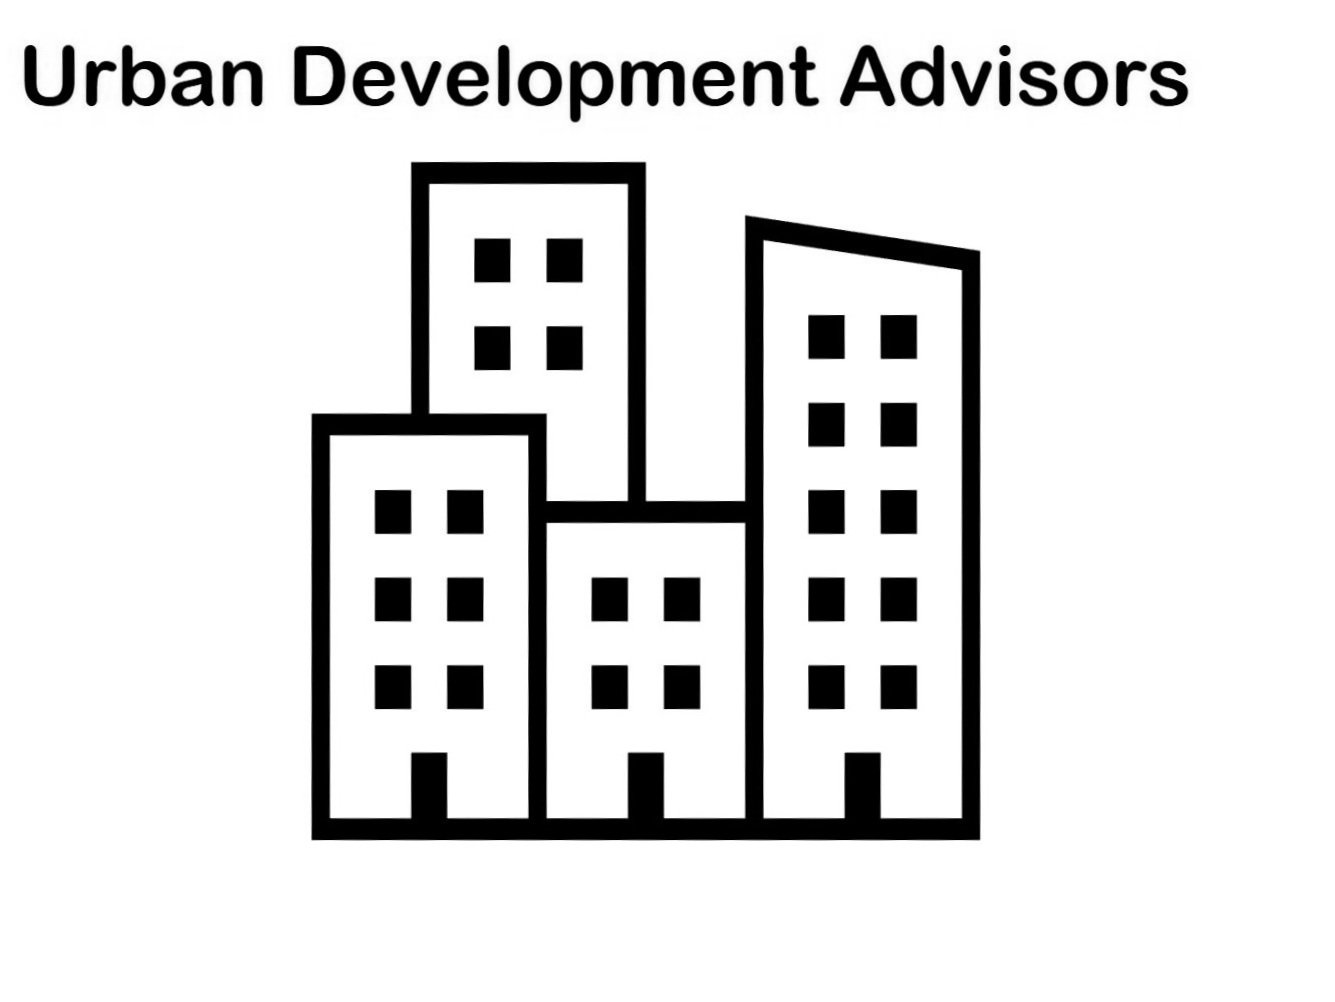                   Urban Development Advisors